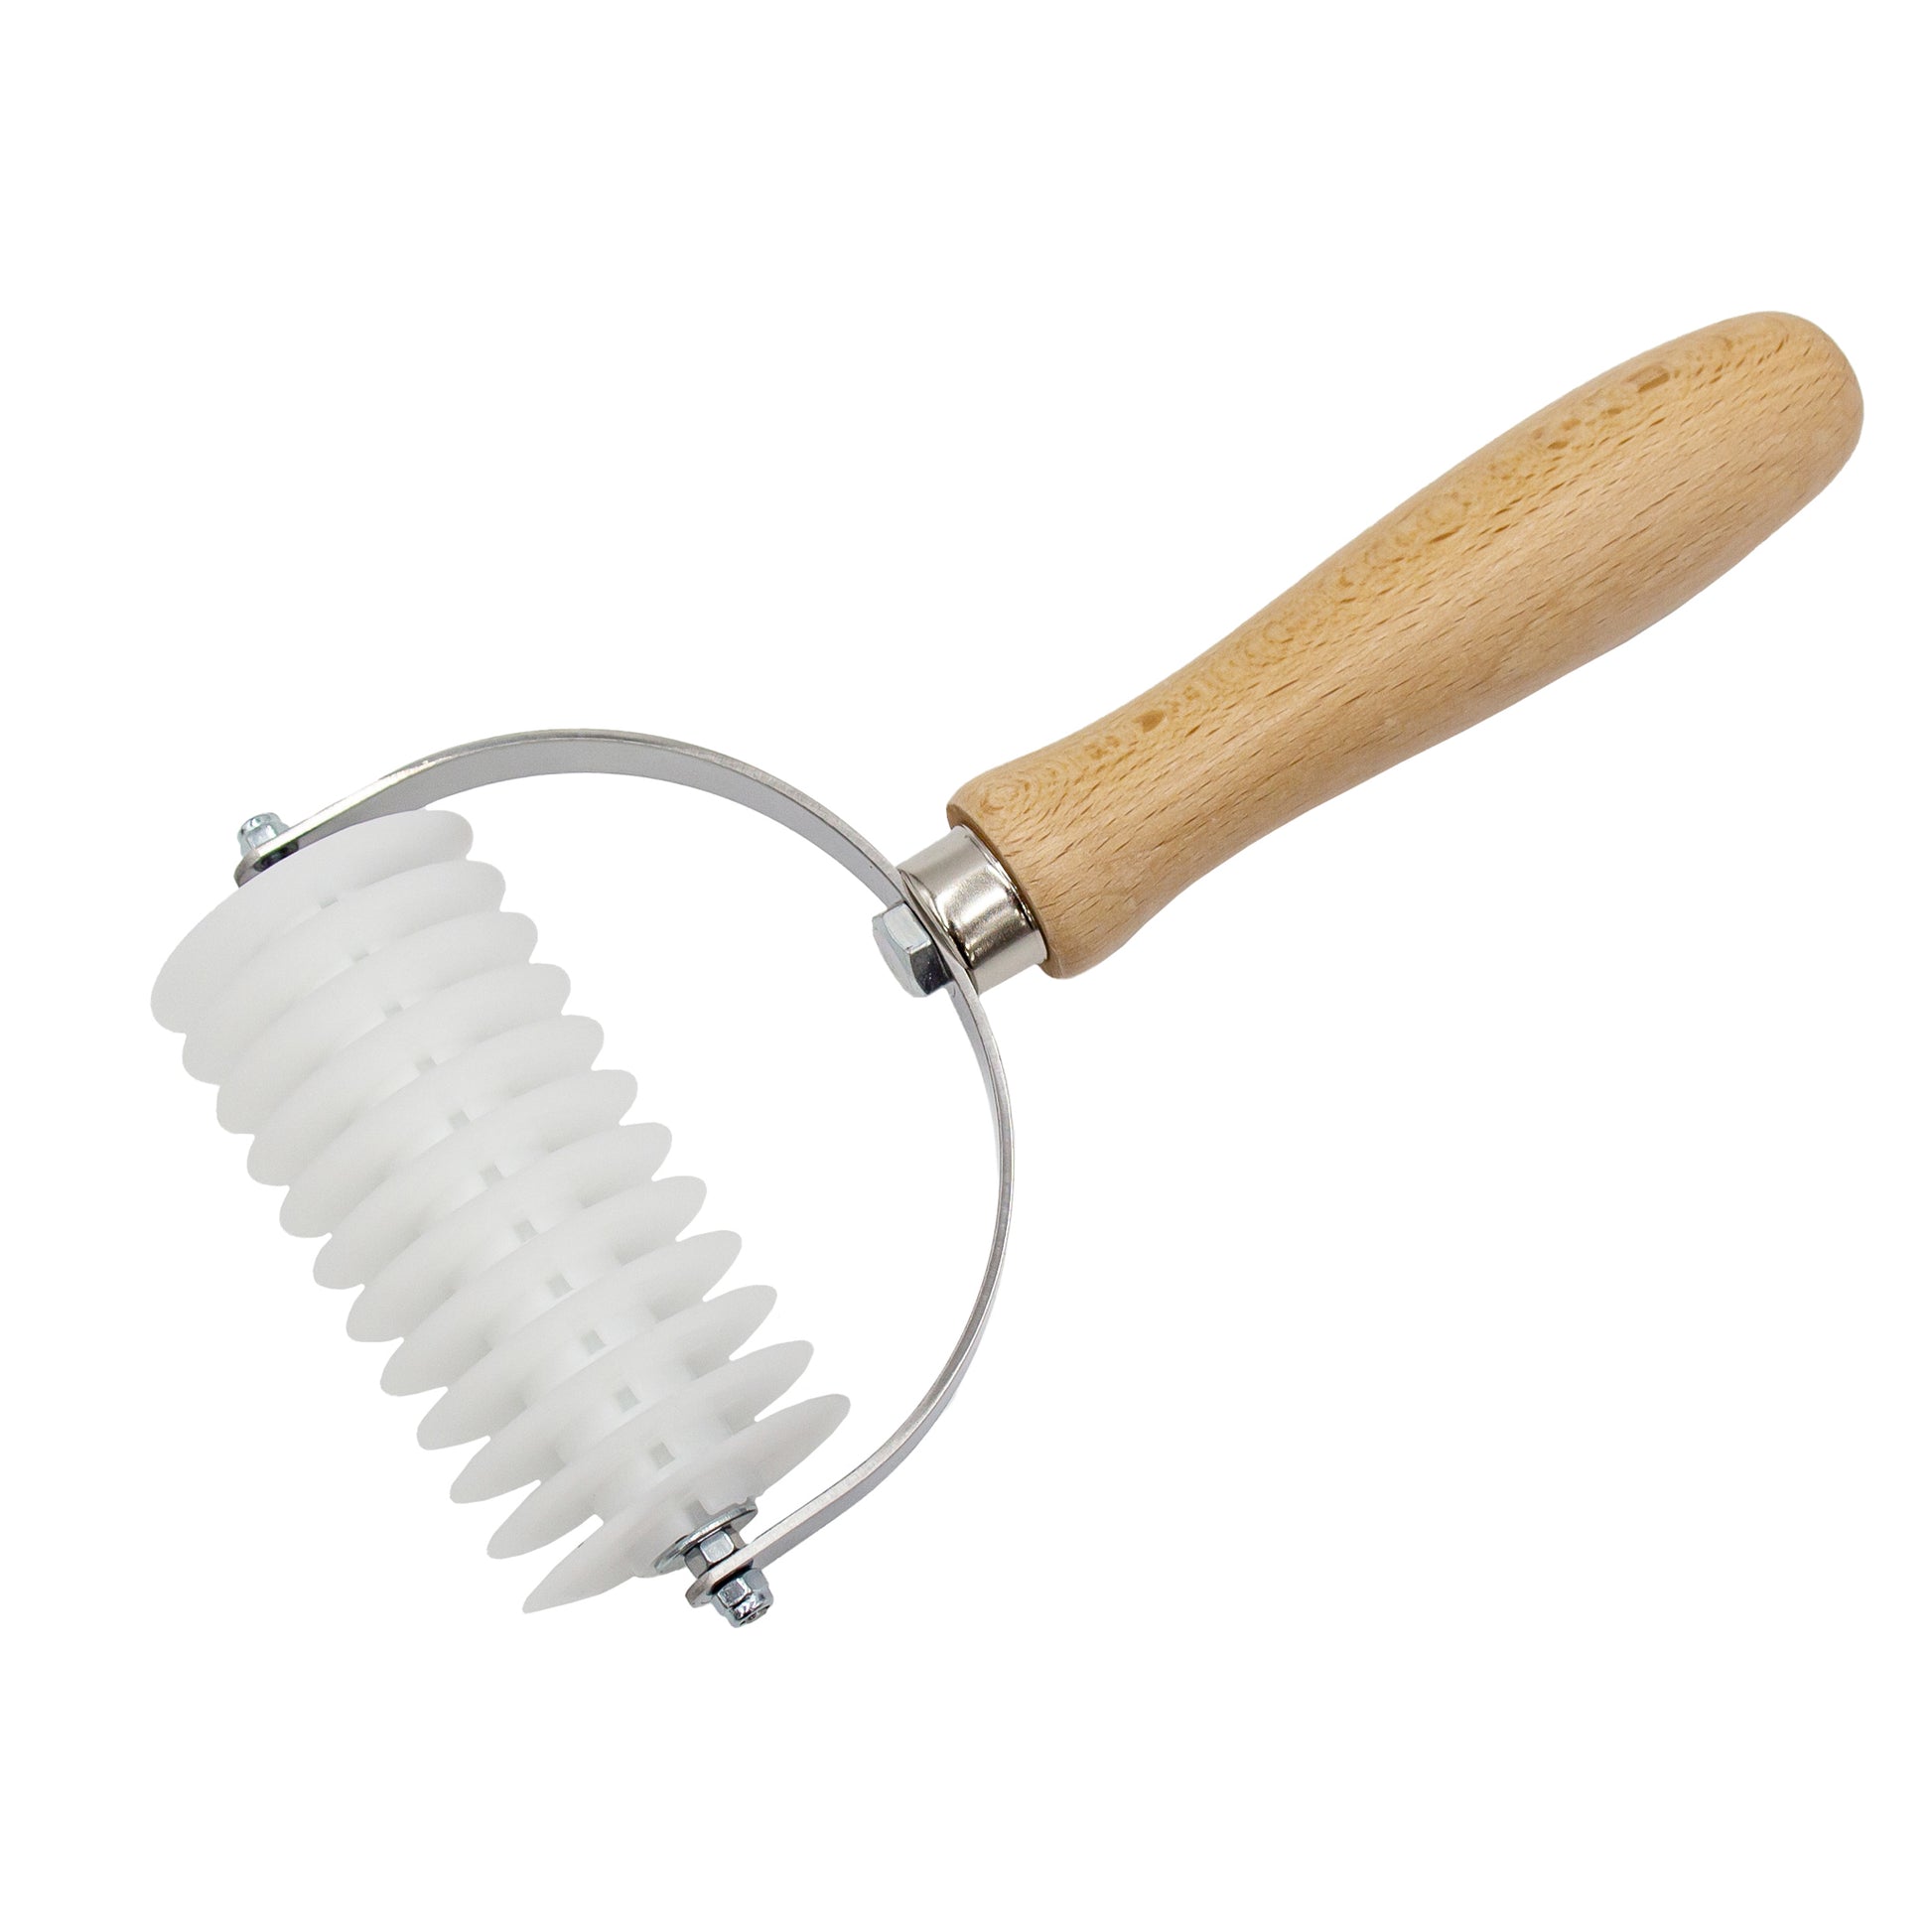 12 strip pasta cutting wheel tool with straight edge. 